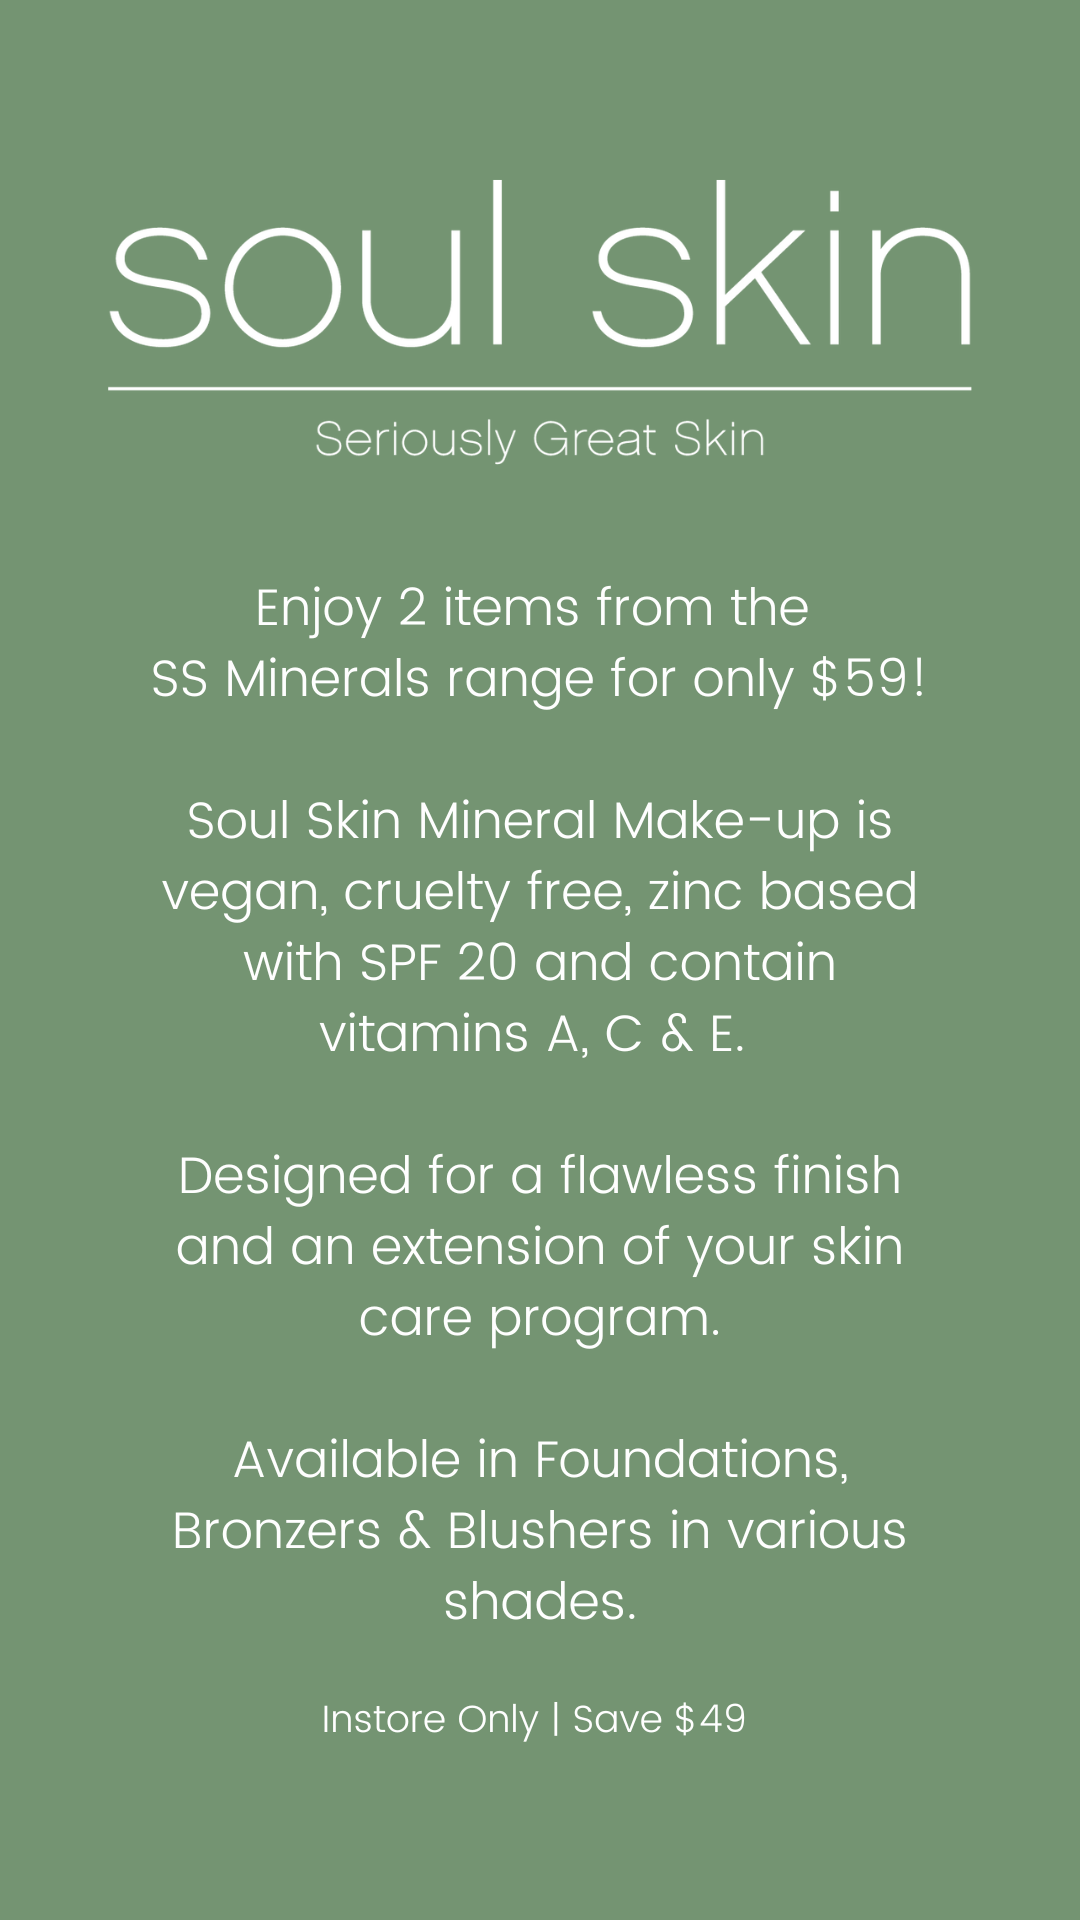 Soul Skin Mineral Makeup Torquay Sale Promotion